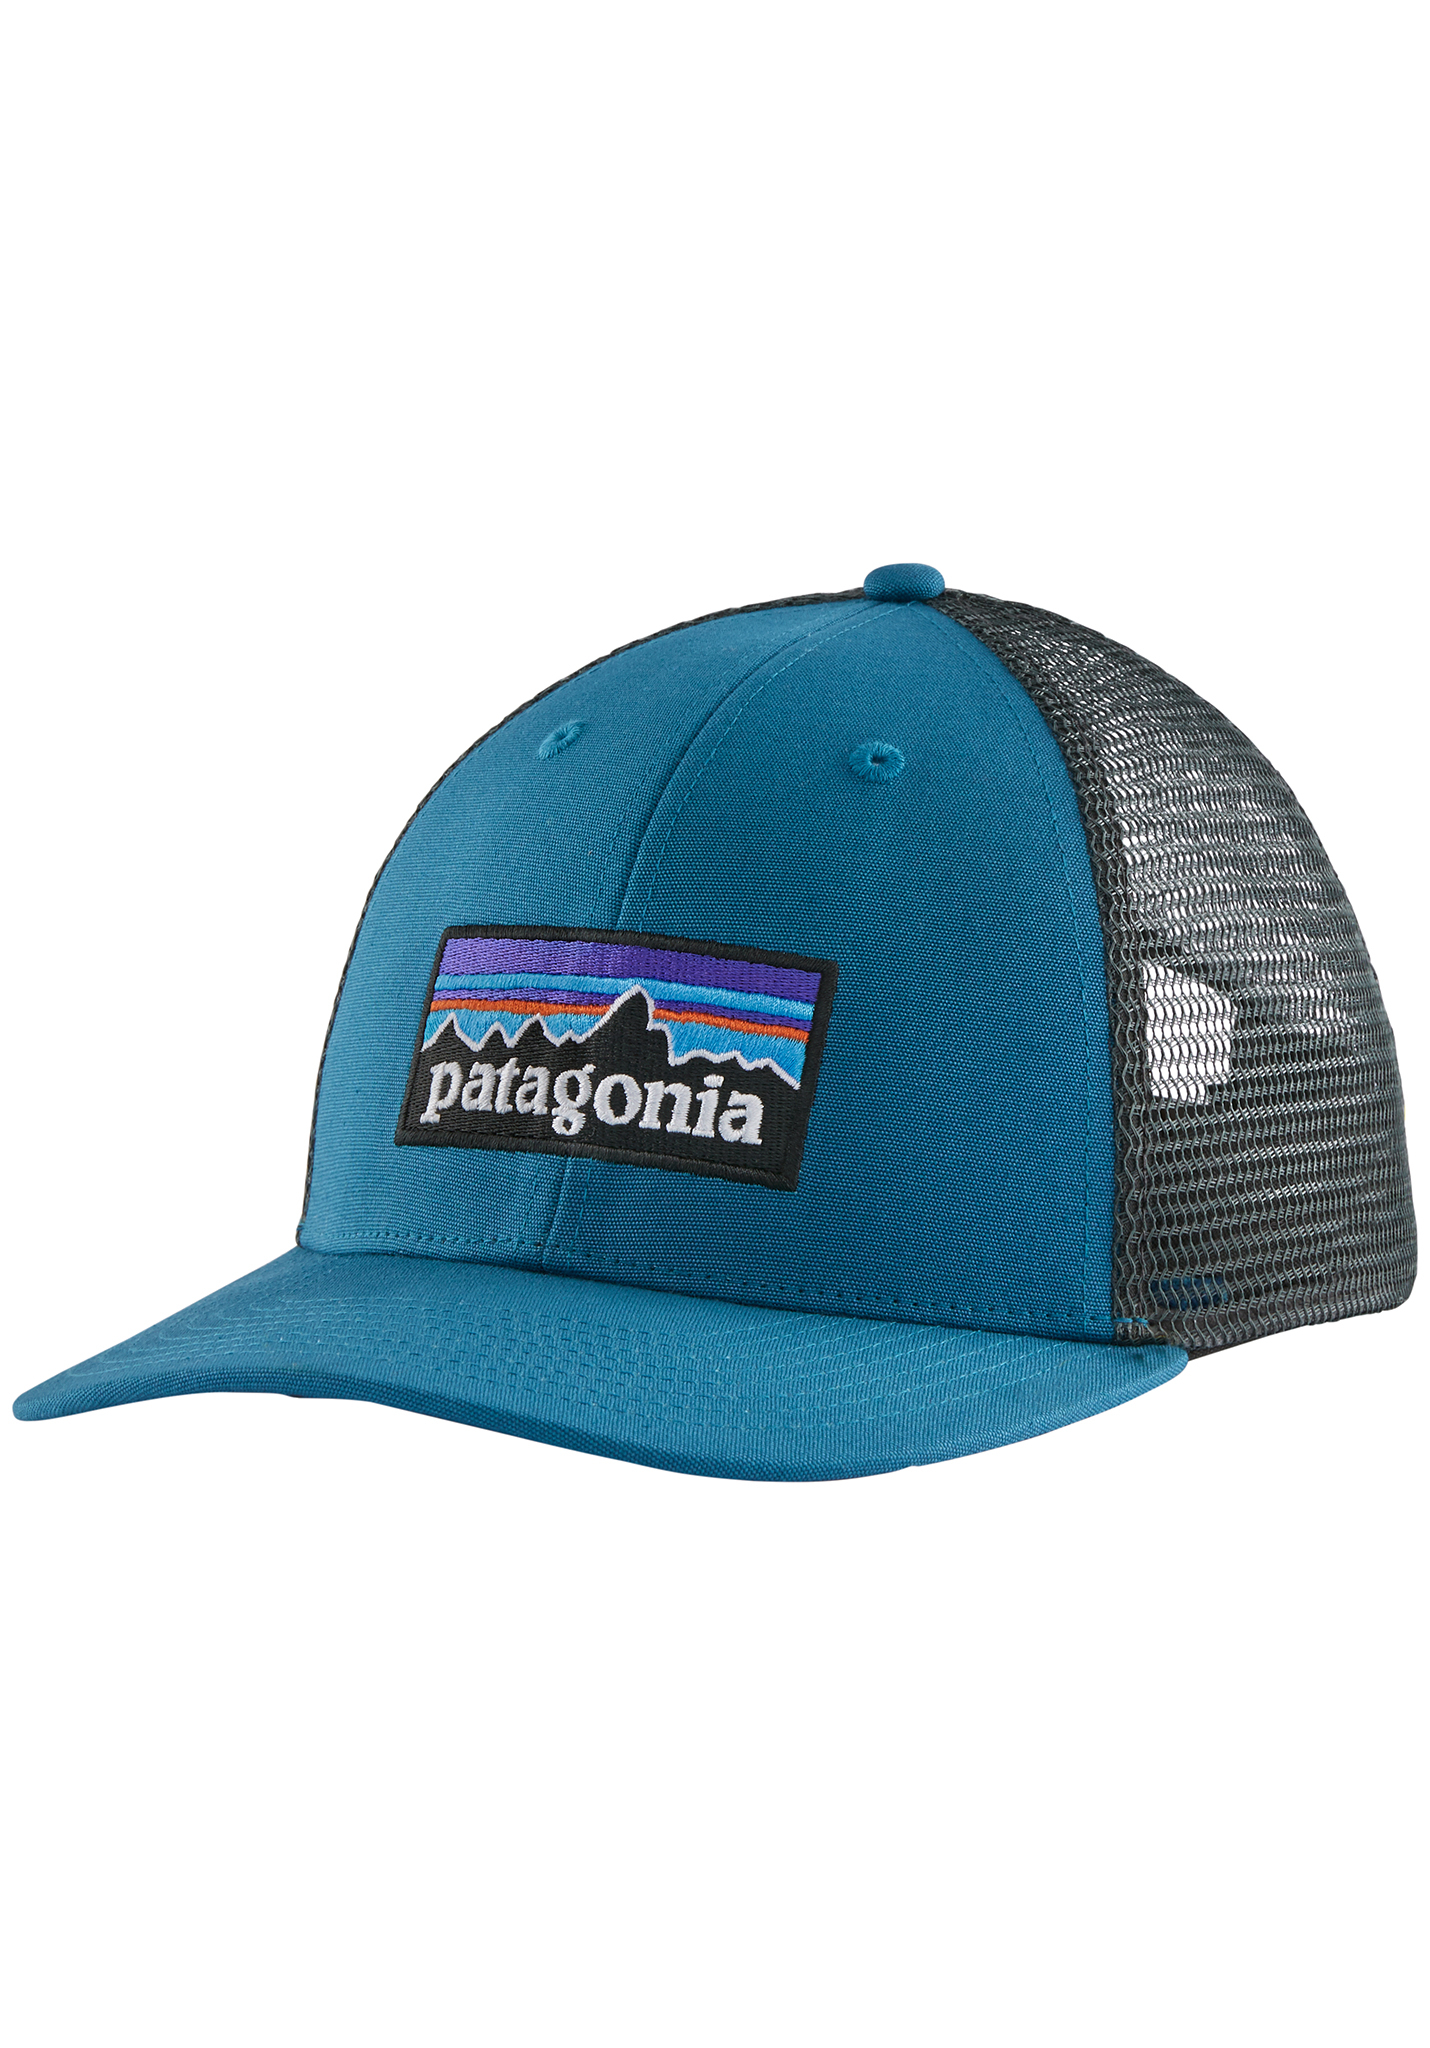 Patagonia P-6 Logo LoPro Strapback Cap himmelblau One Size